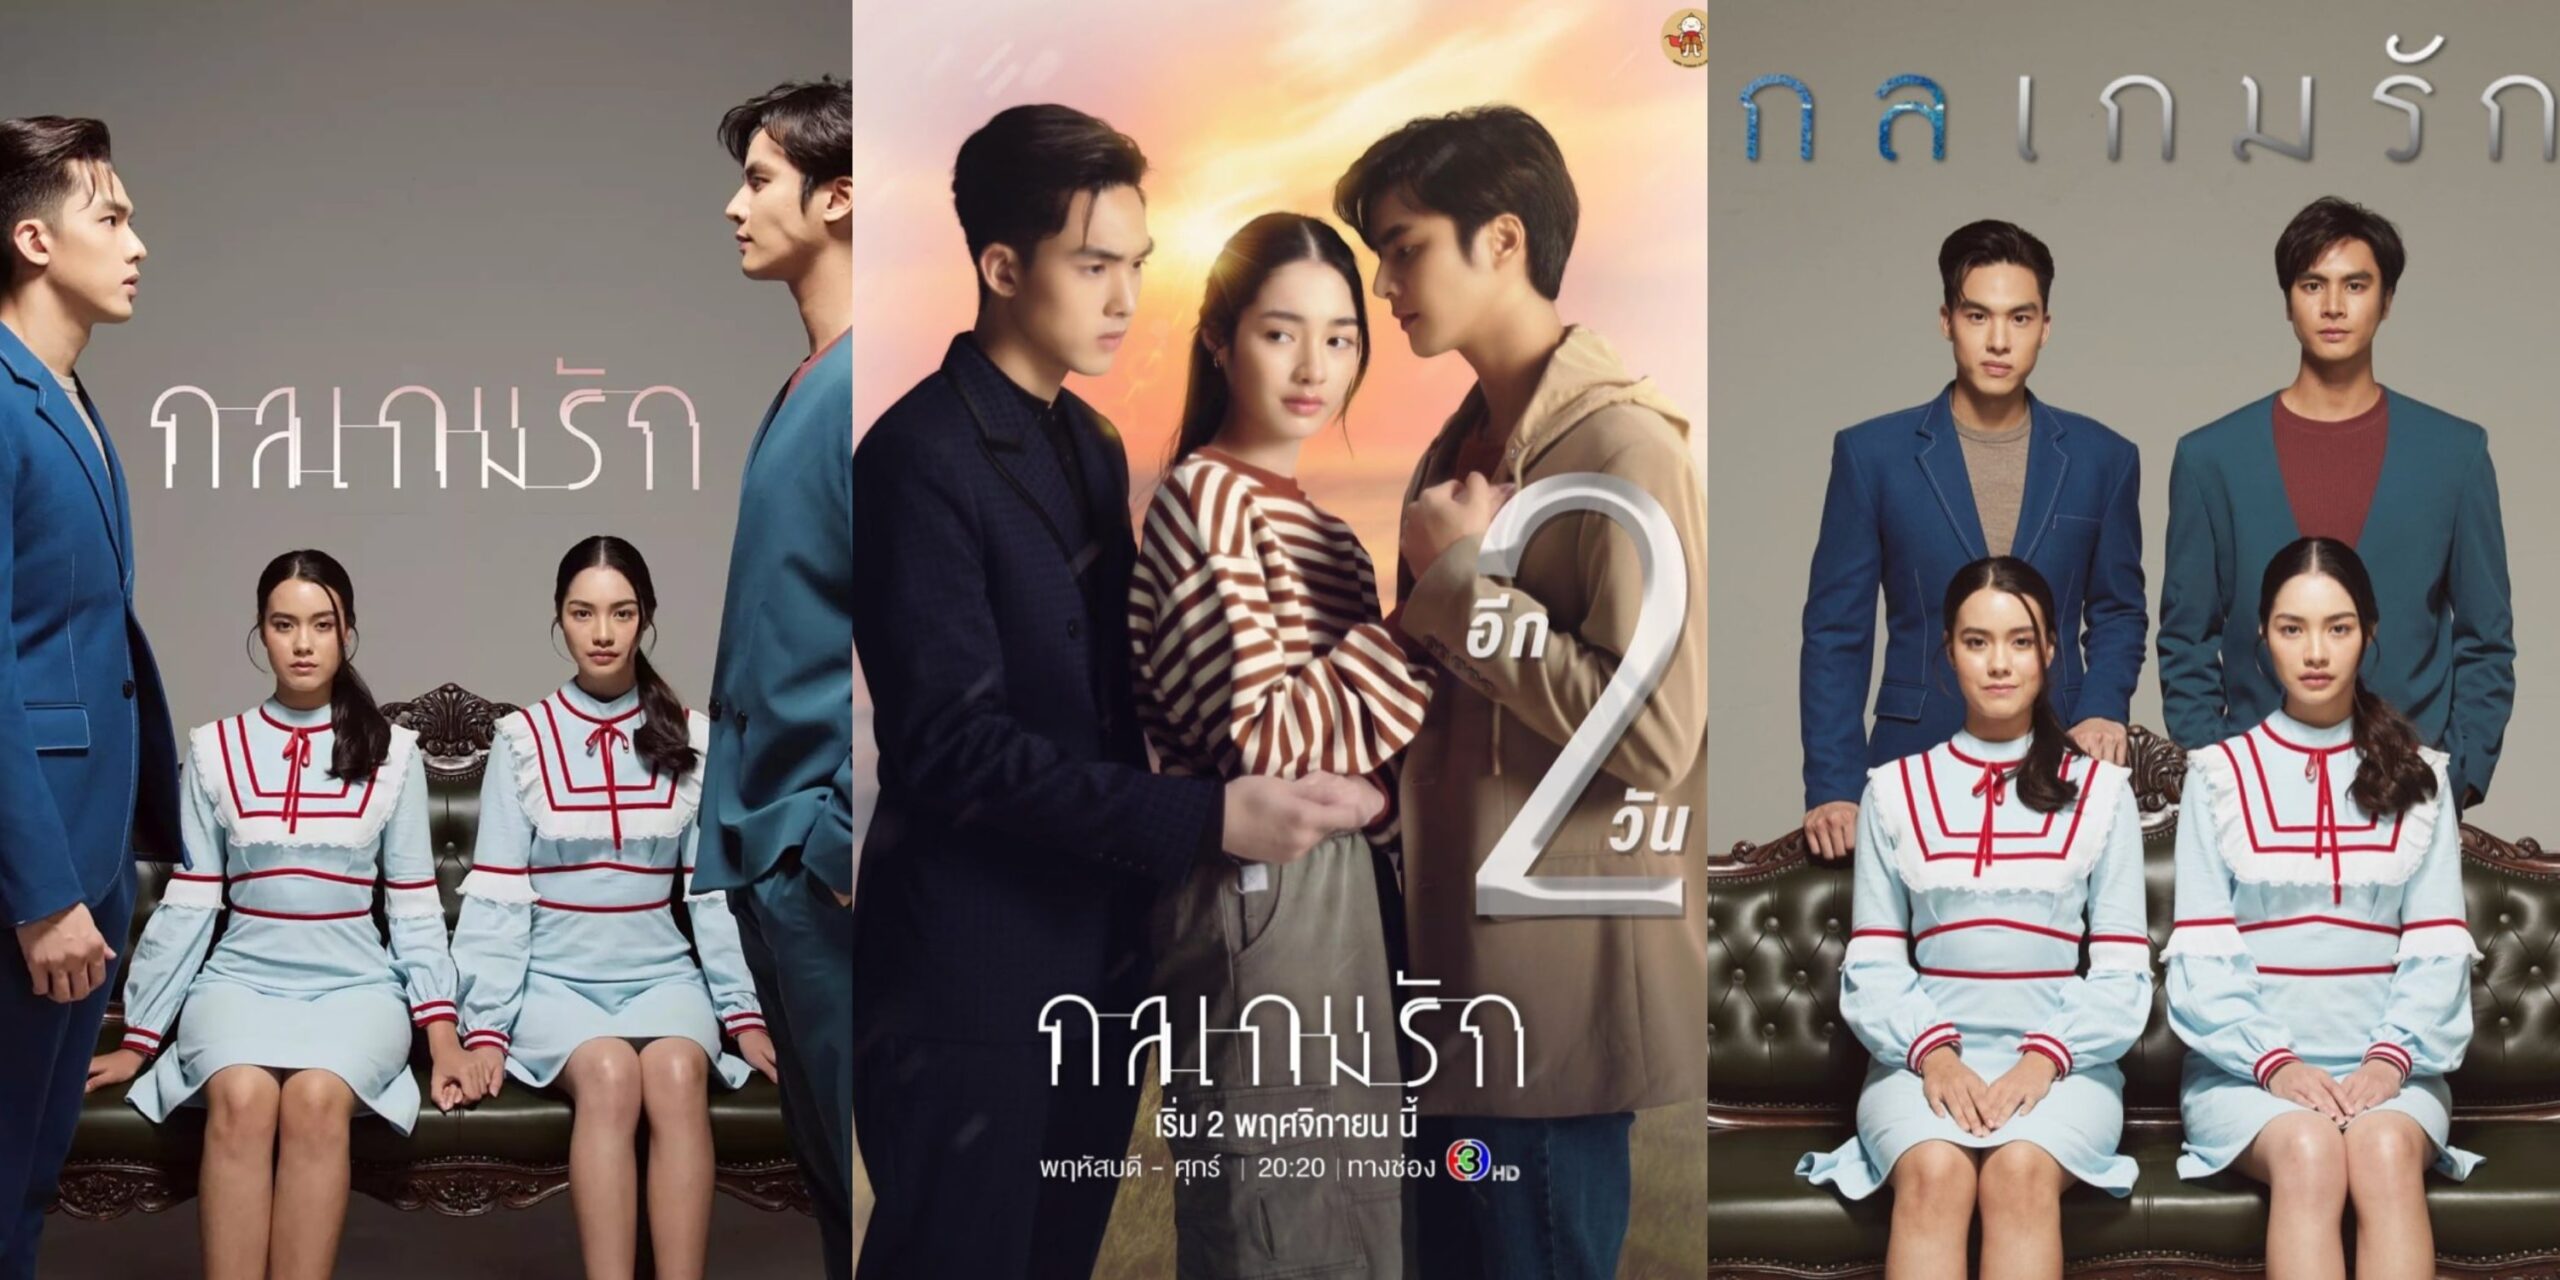 Thai Drama Tricky in Love Episode 10 Release Date